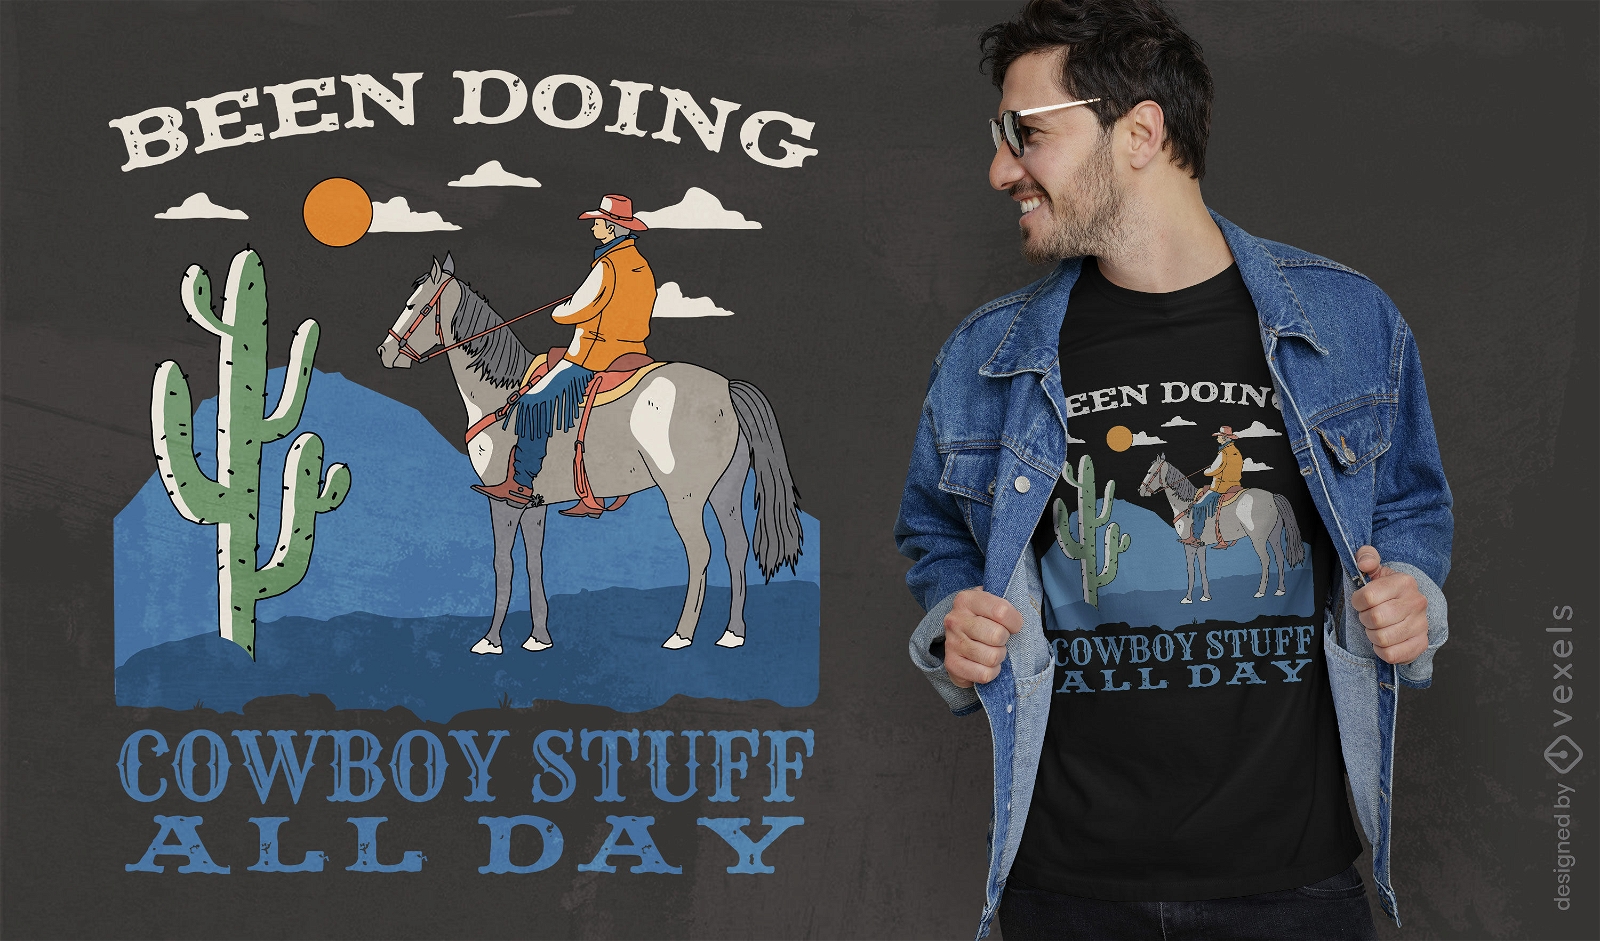 Cowboy stuff t-shirt design